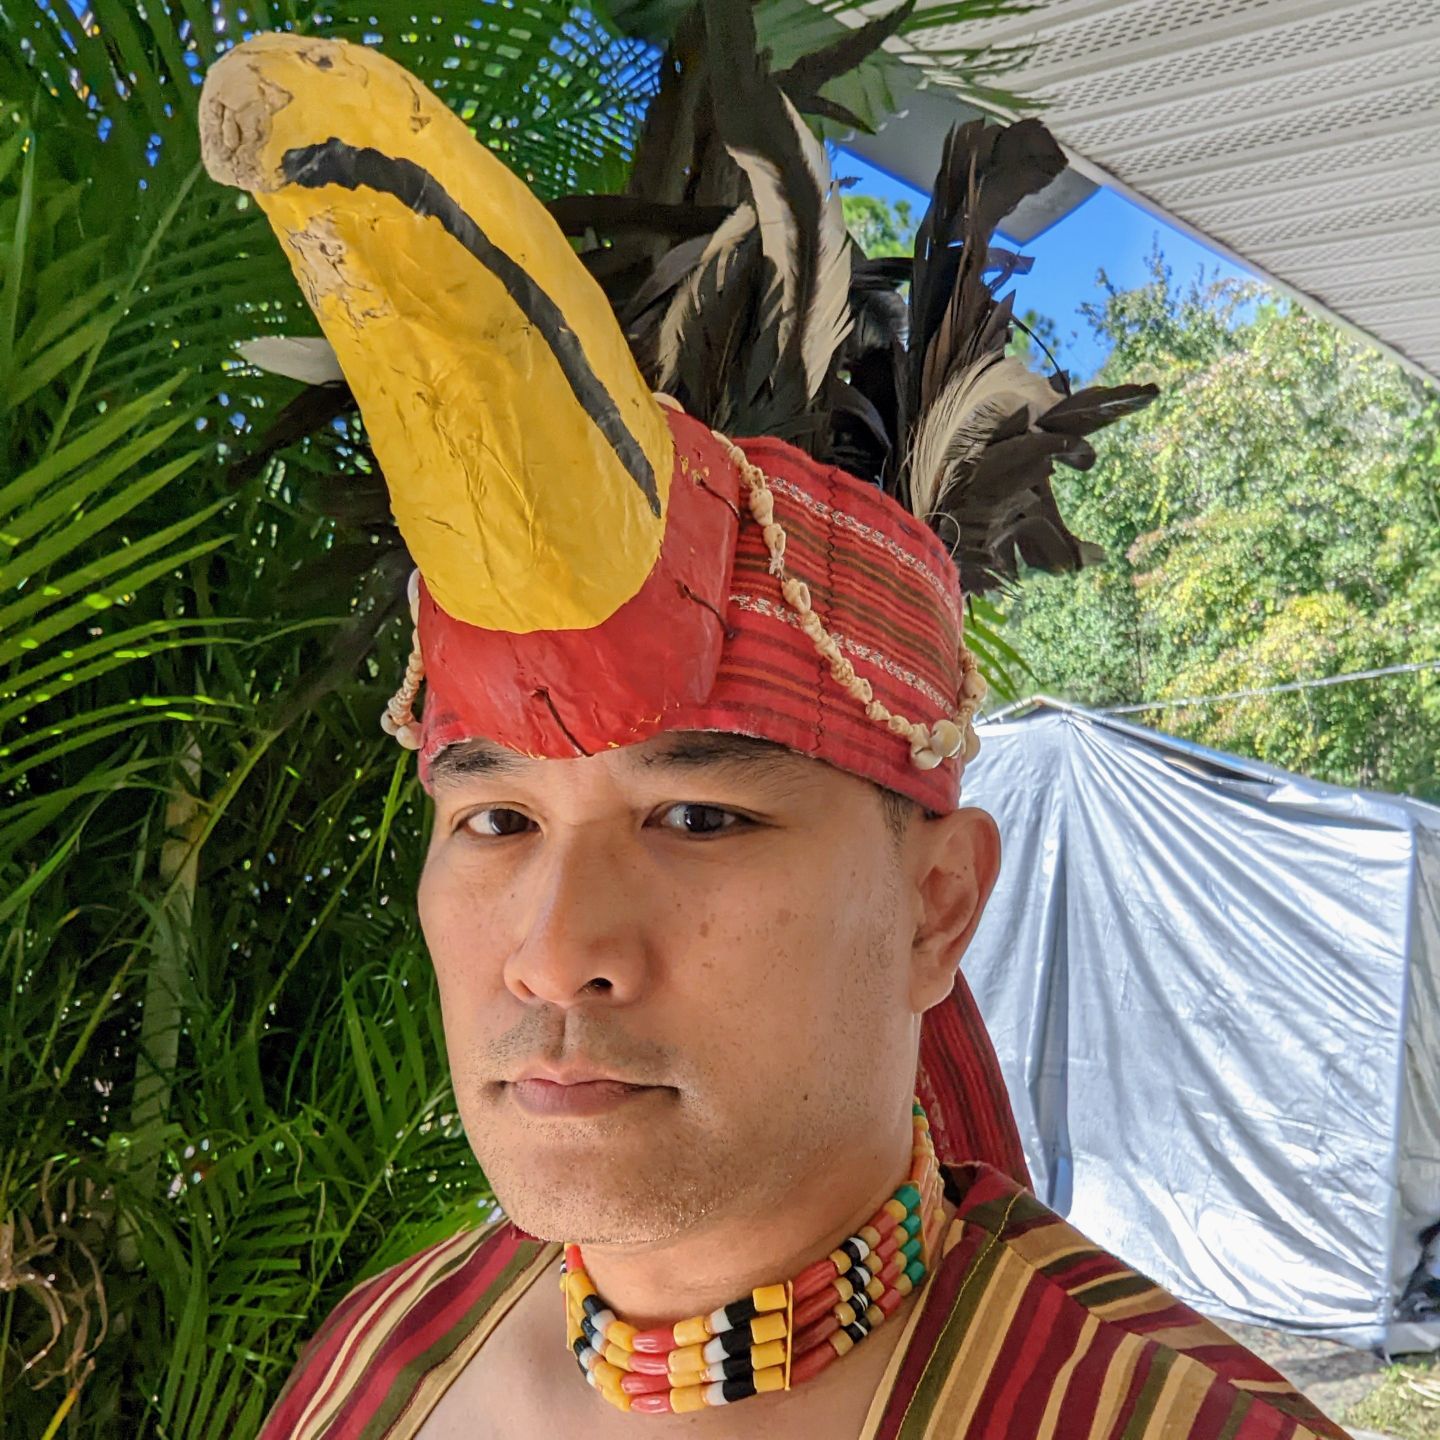 A man in traditional Filipino dance costume with bird headdress